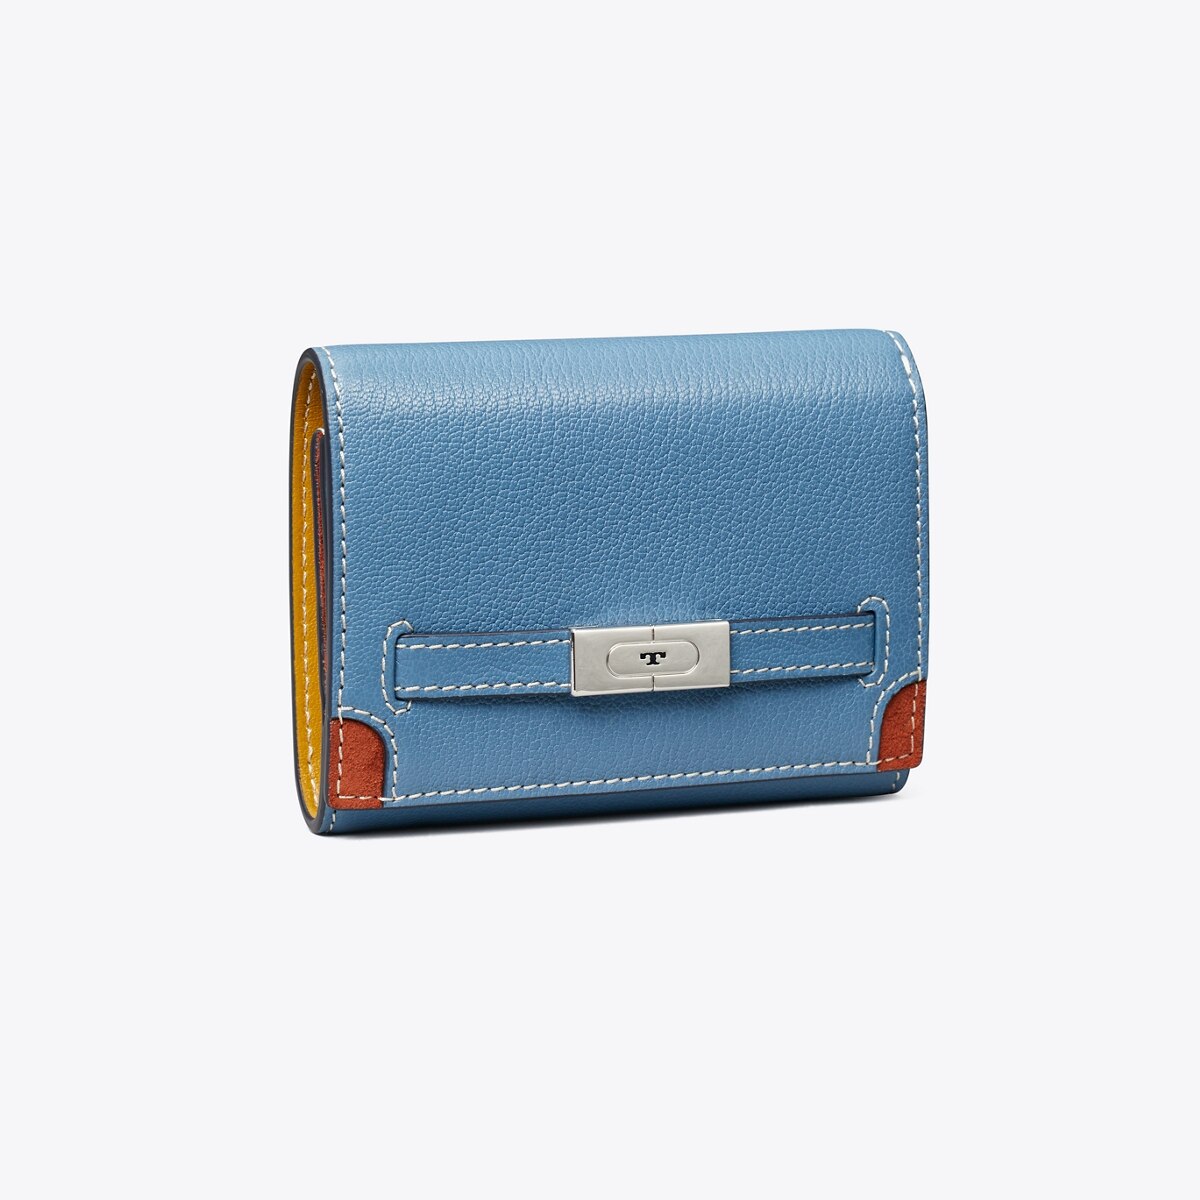 LOUIS VUITTON Suhali Compact Zipped Wallet Blue | FASHIONPHILE